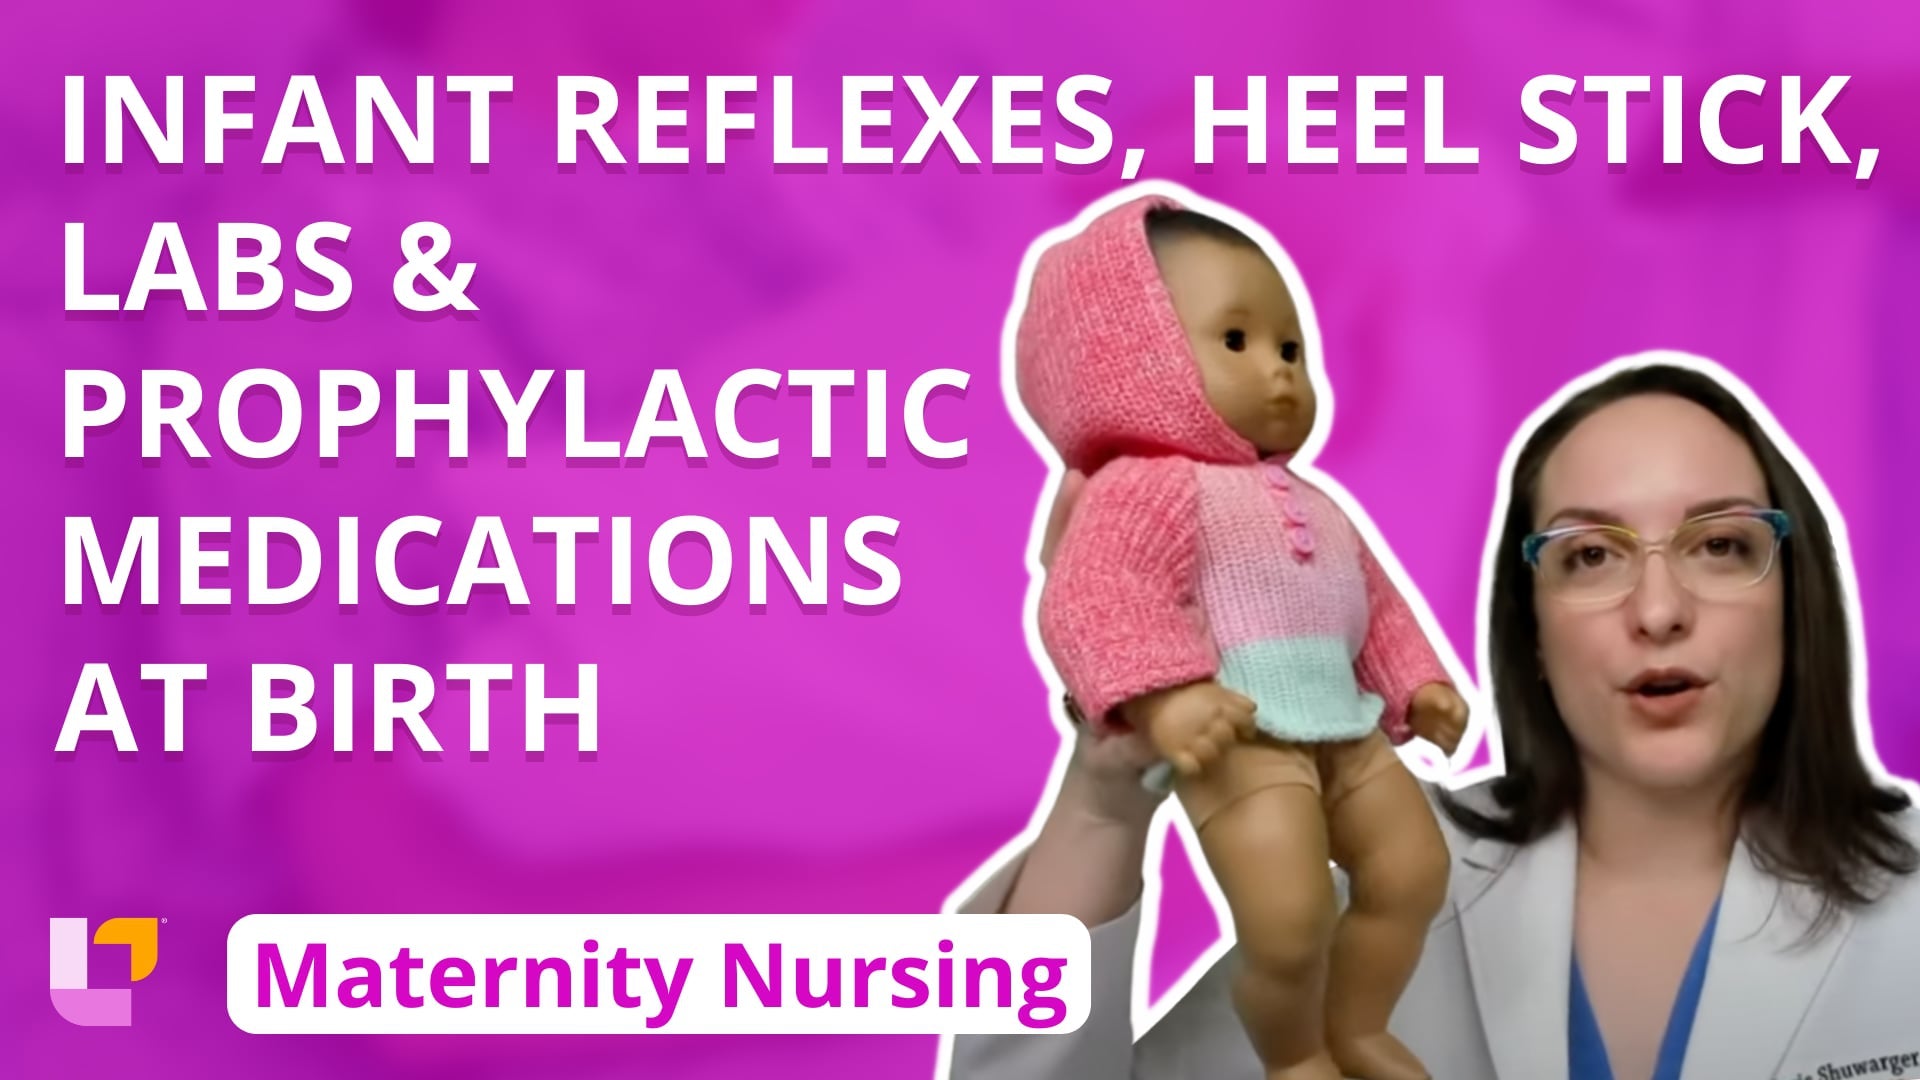 Maternity - Newborn, part 3: Infant Reflexes, Heel Stick, Lab Tests and Prophylacticat Birth - LevelUpRN